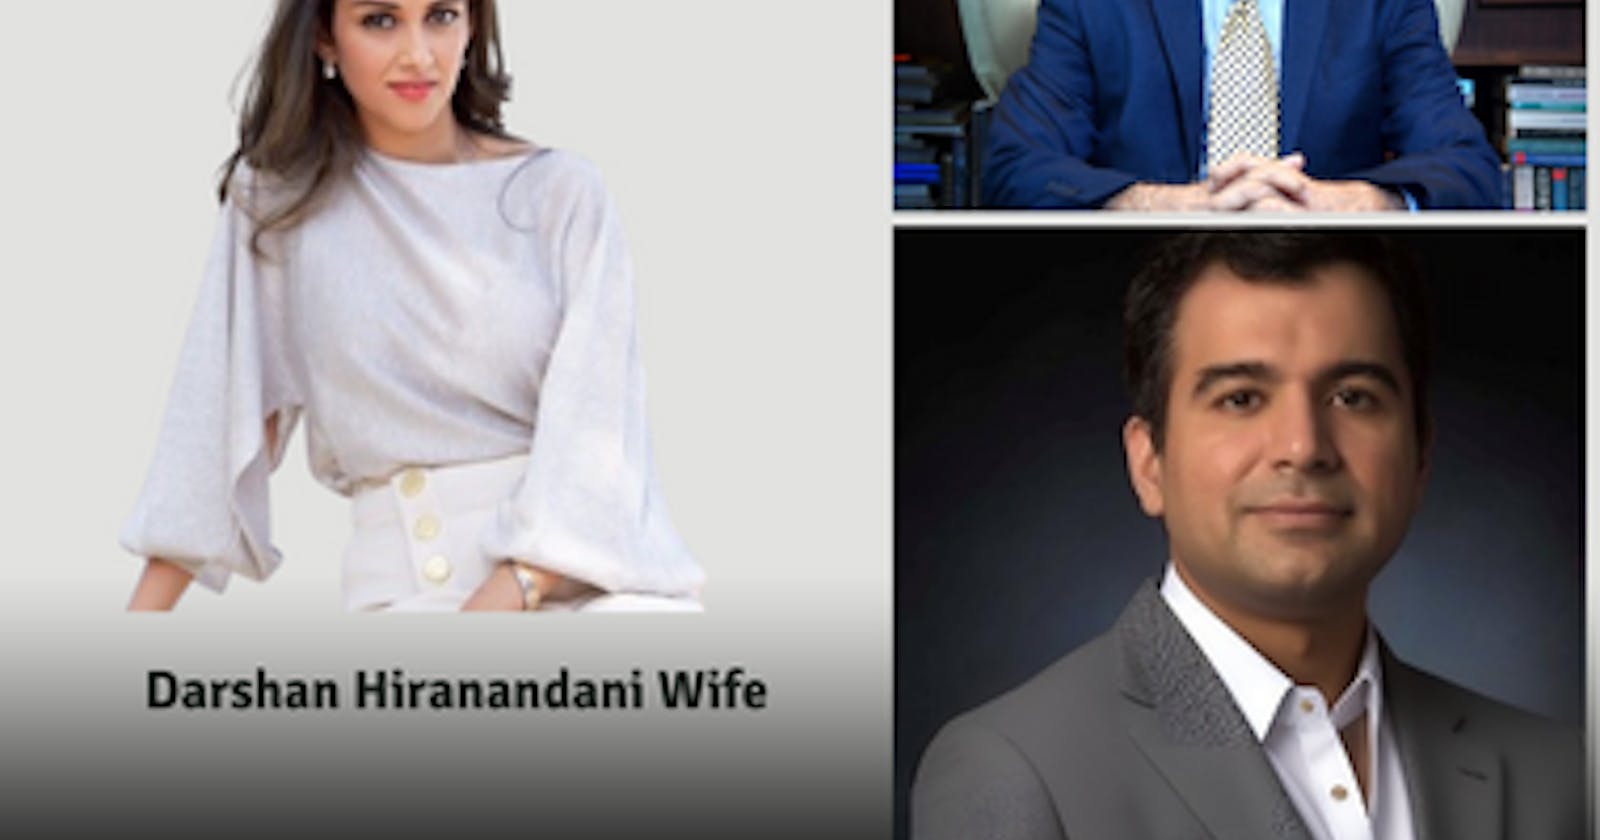 Who is Darshan Hiranandani Wife & Journey?